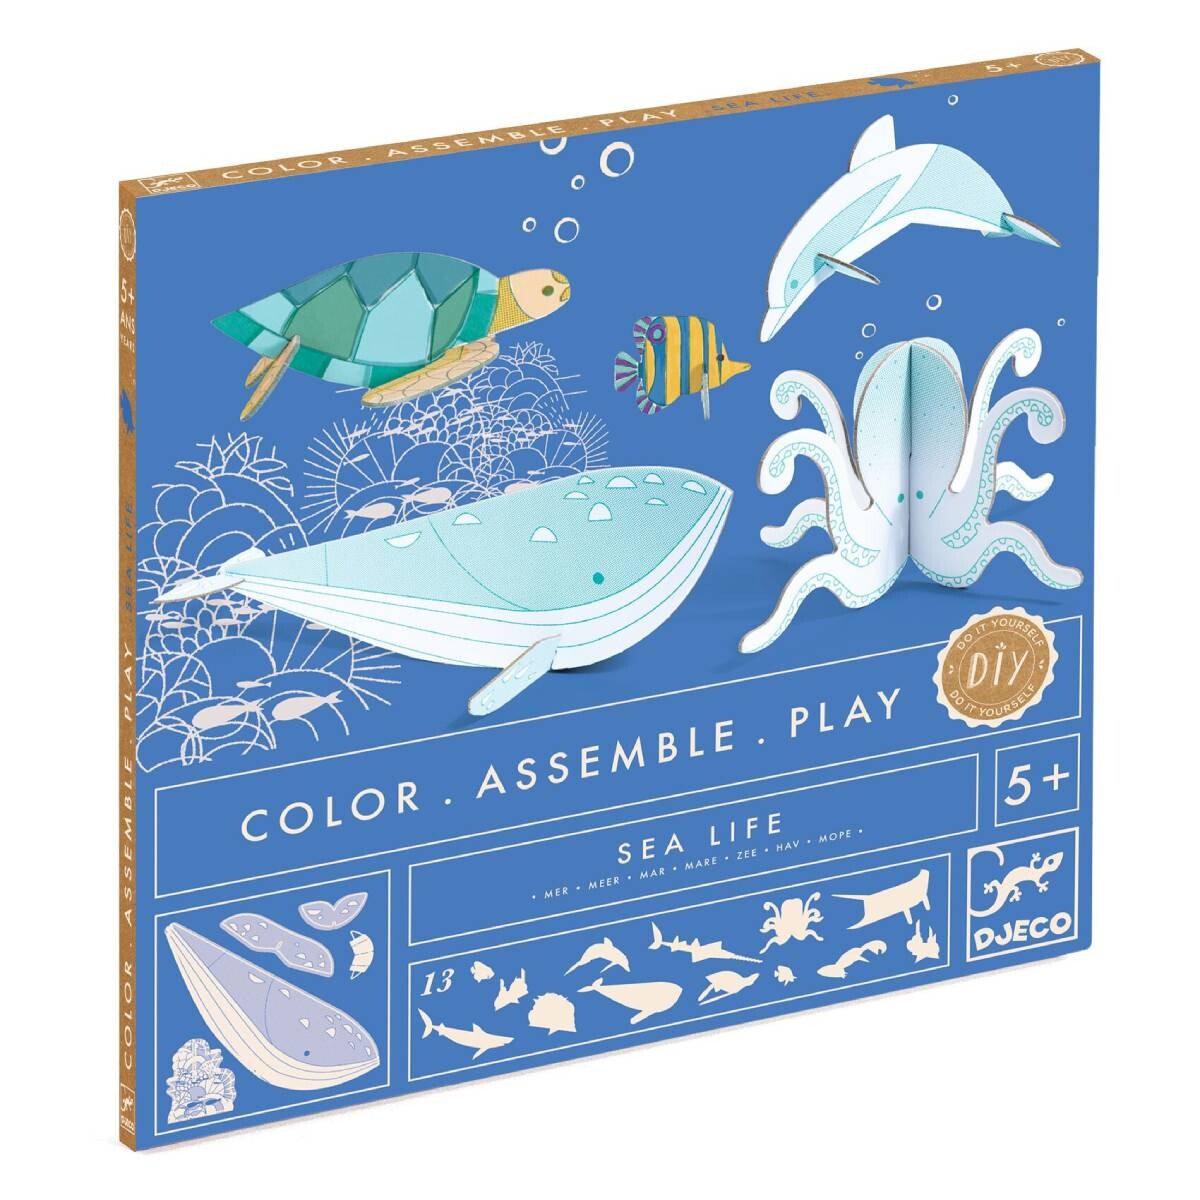 Color, Assemble, Play - Mar 